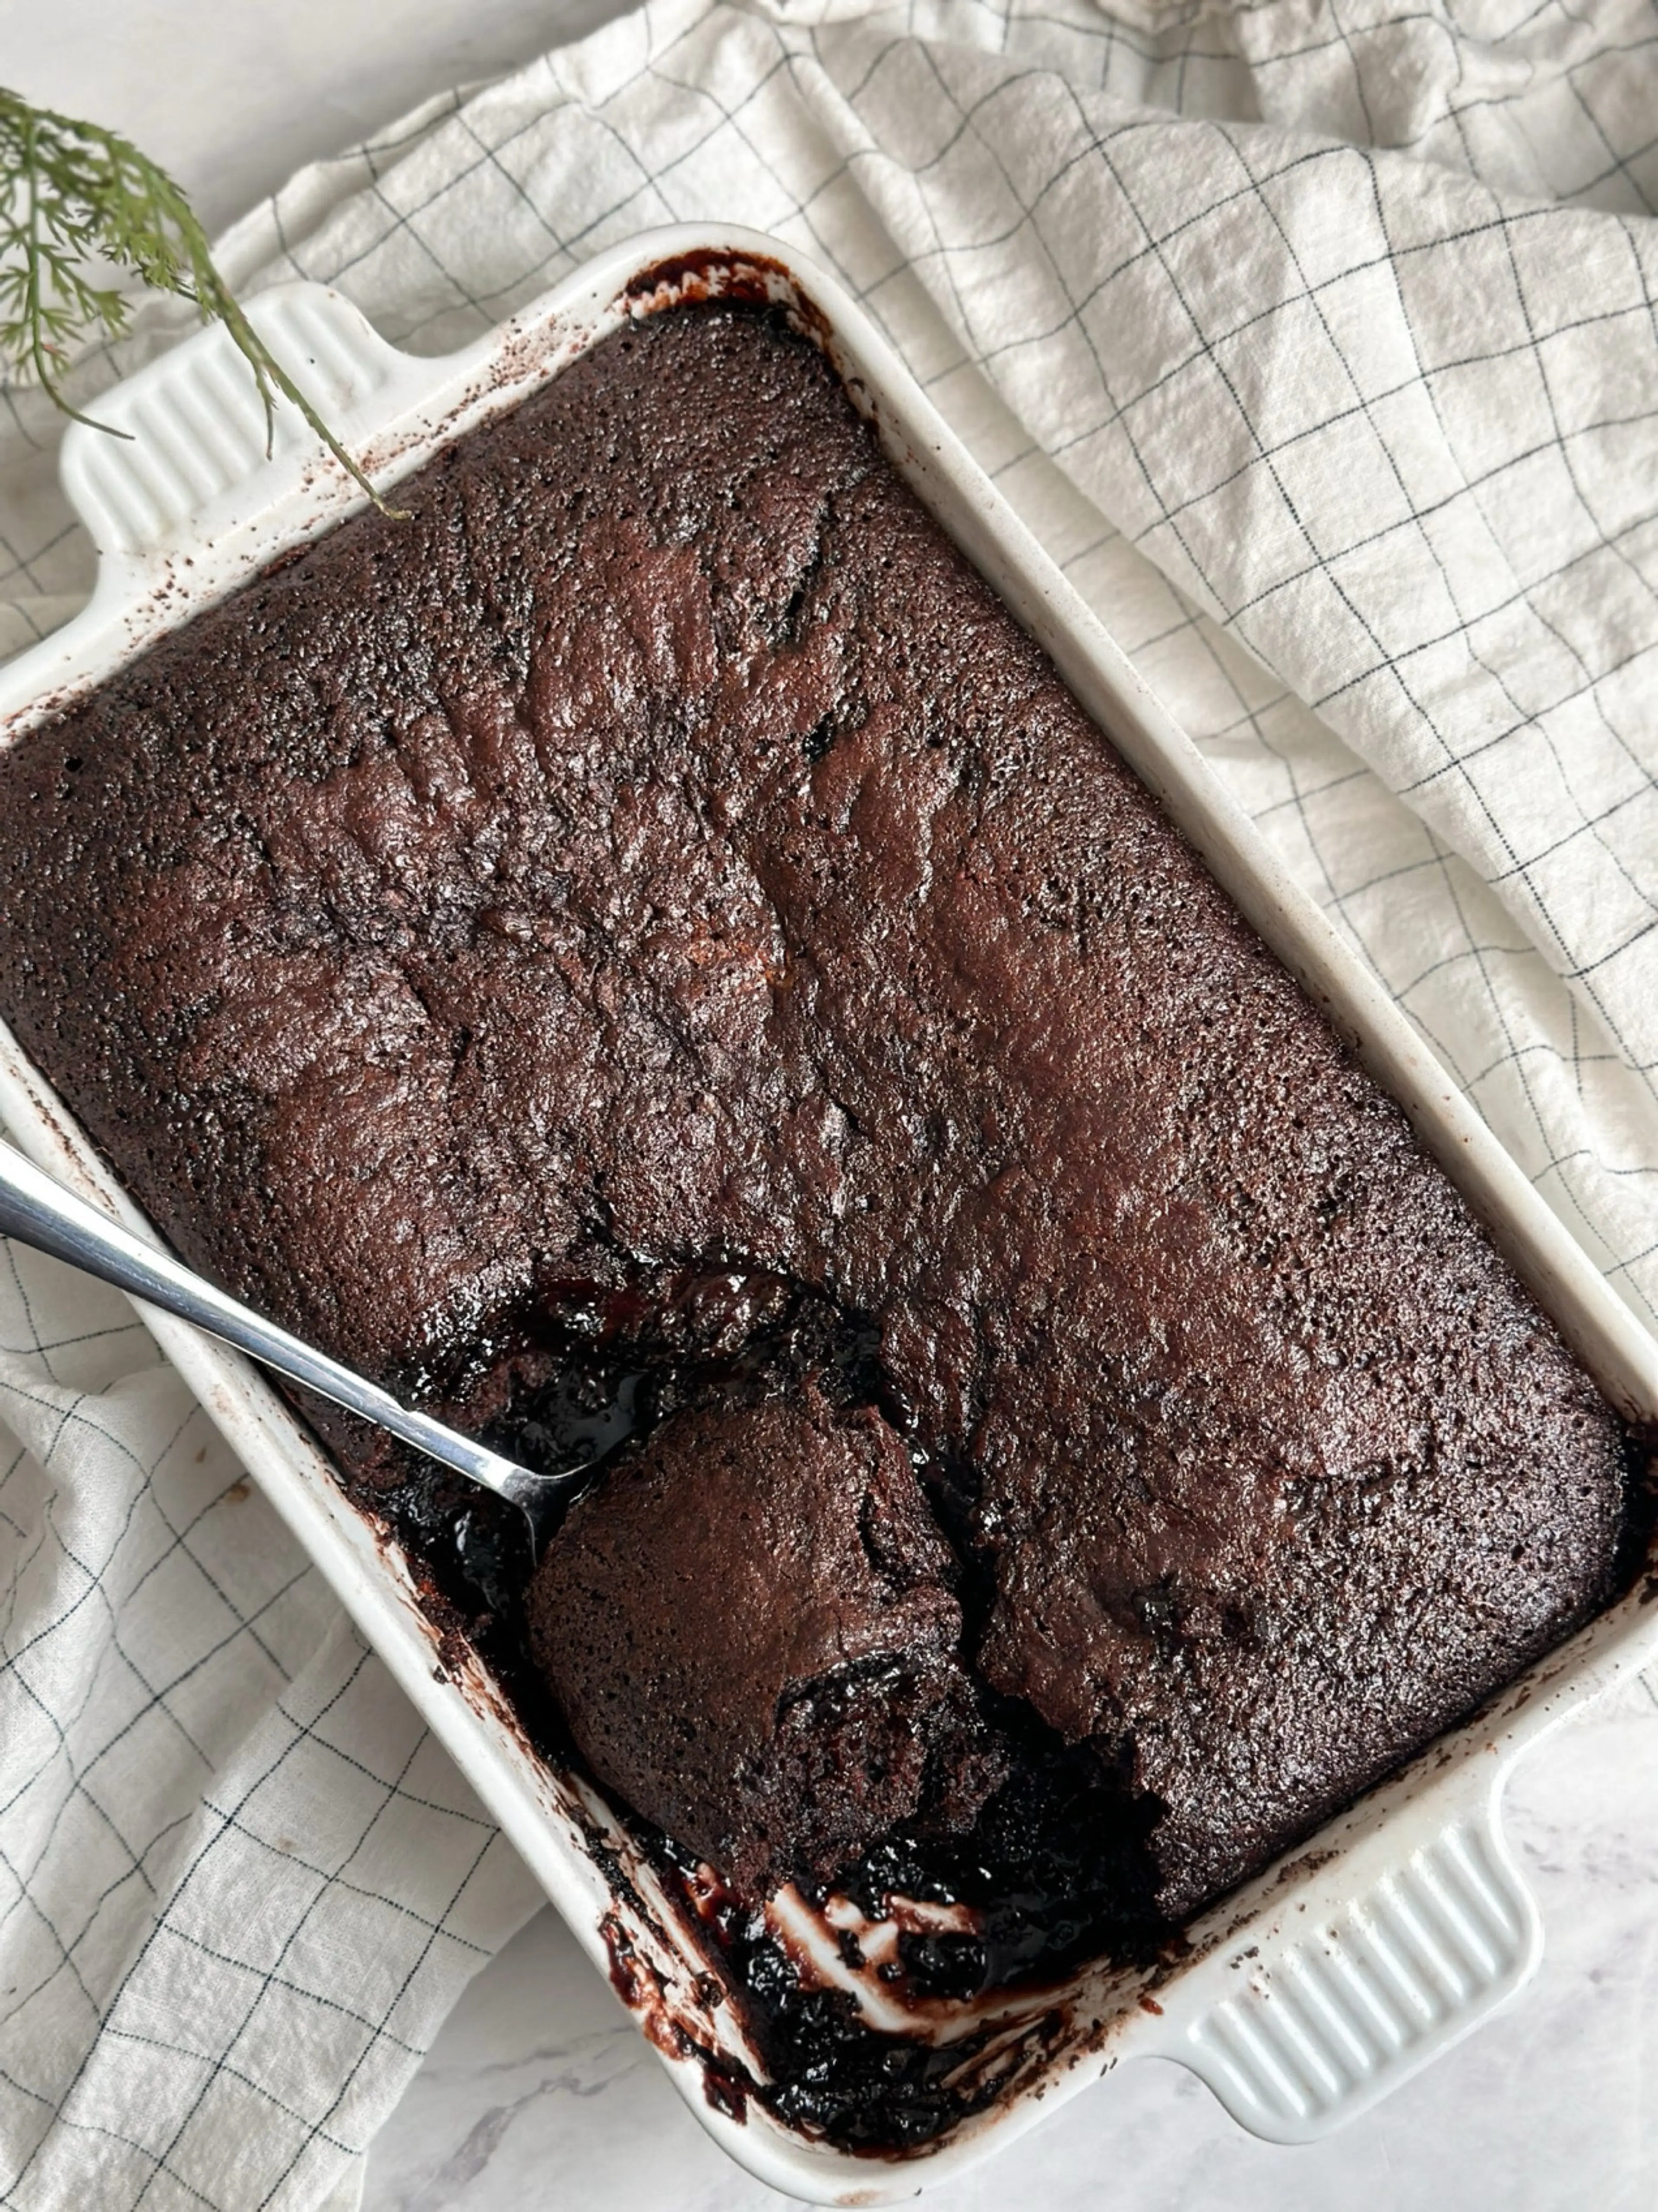 HOT FUDGE CHOCOLATE PUDDING CAKE RECIPE